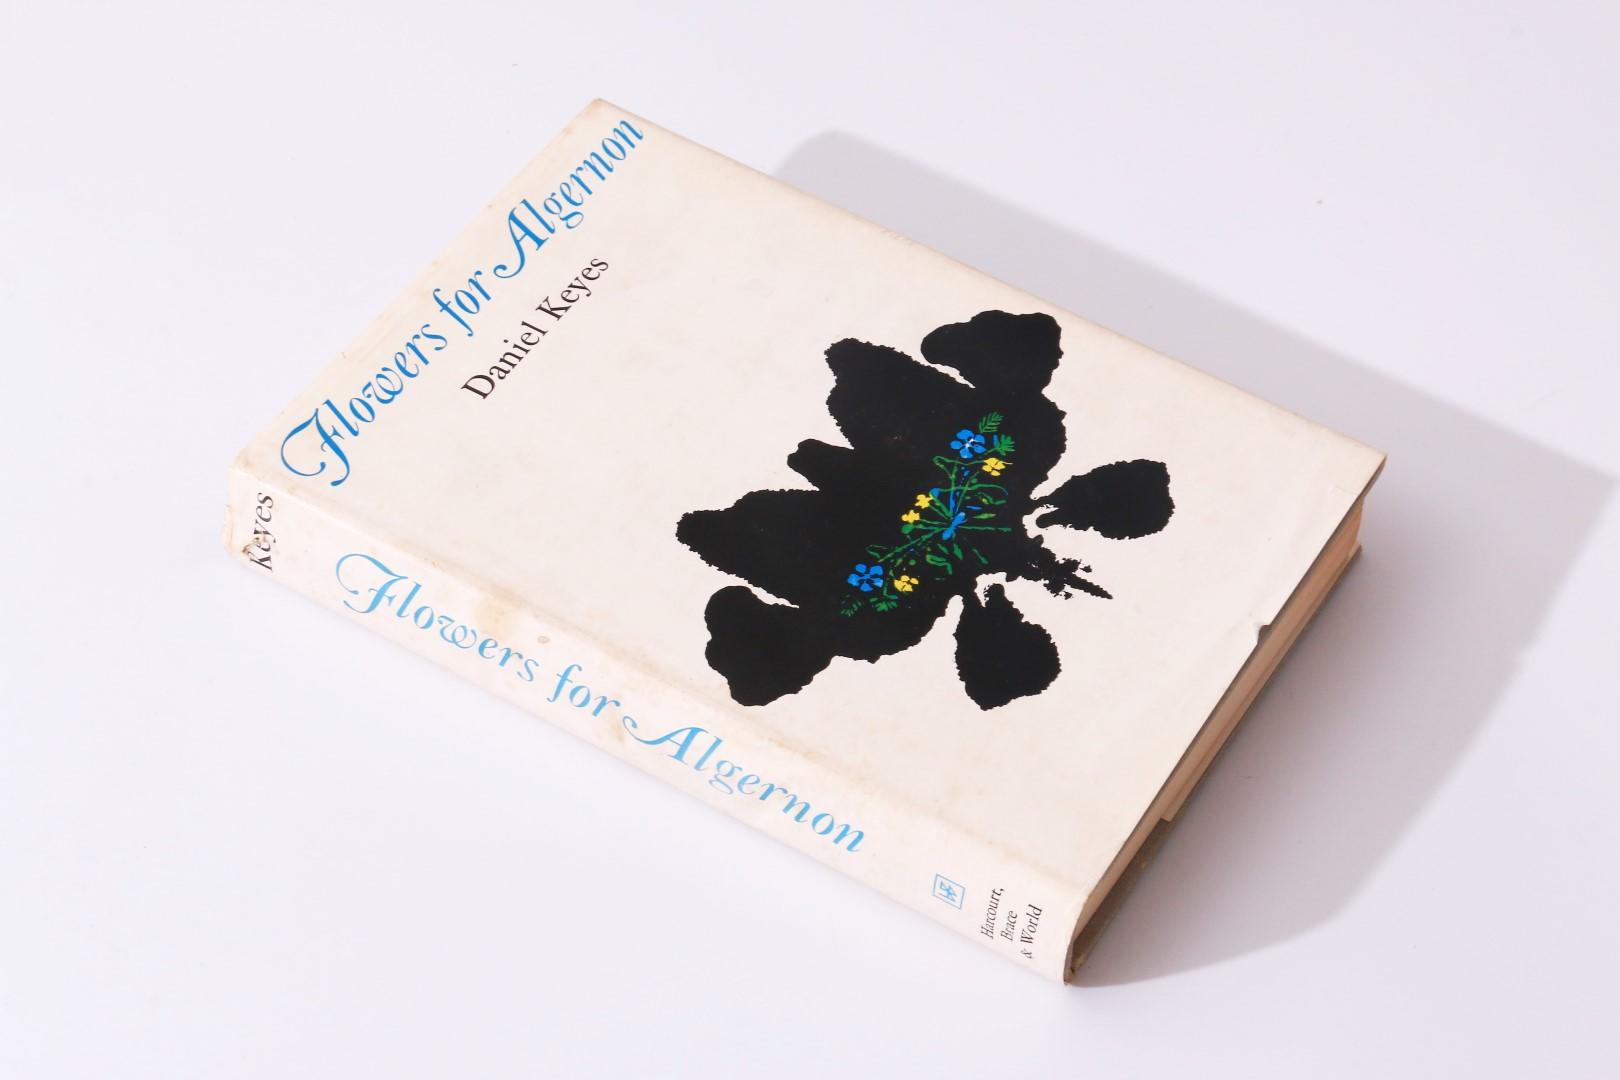 Daniel Keyes - Flowers for Algernon - Harcourt, Brace & World, 1966, First Edition.